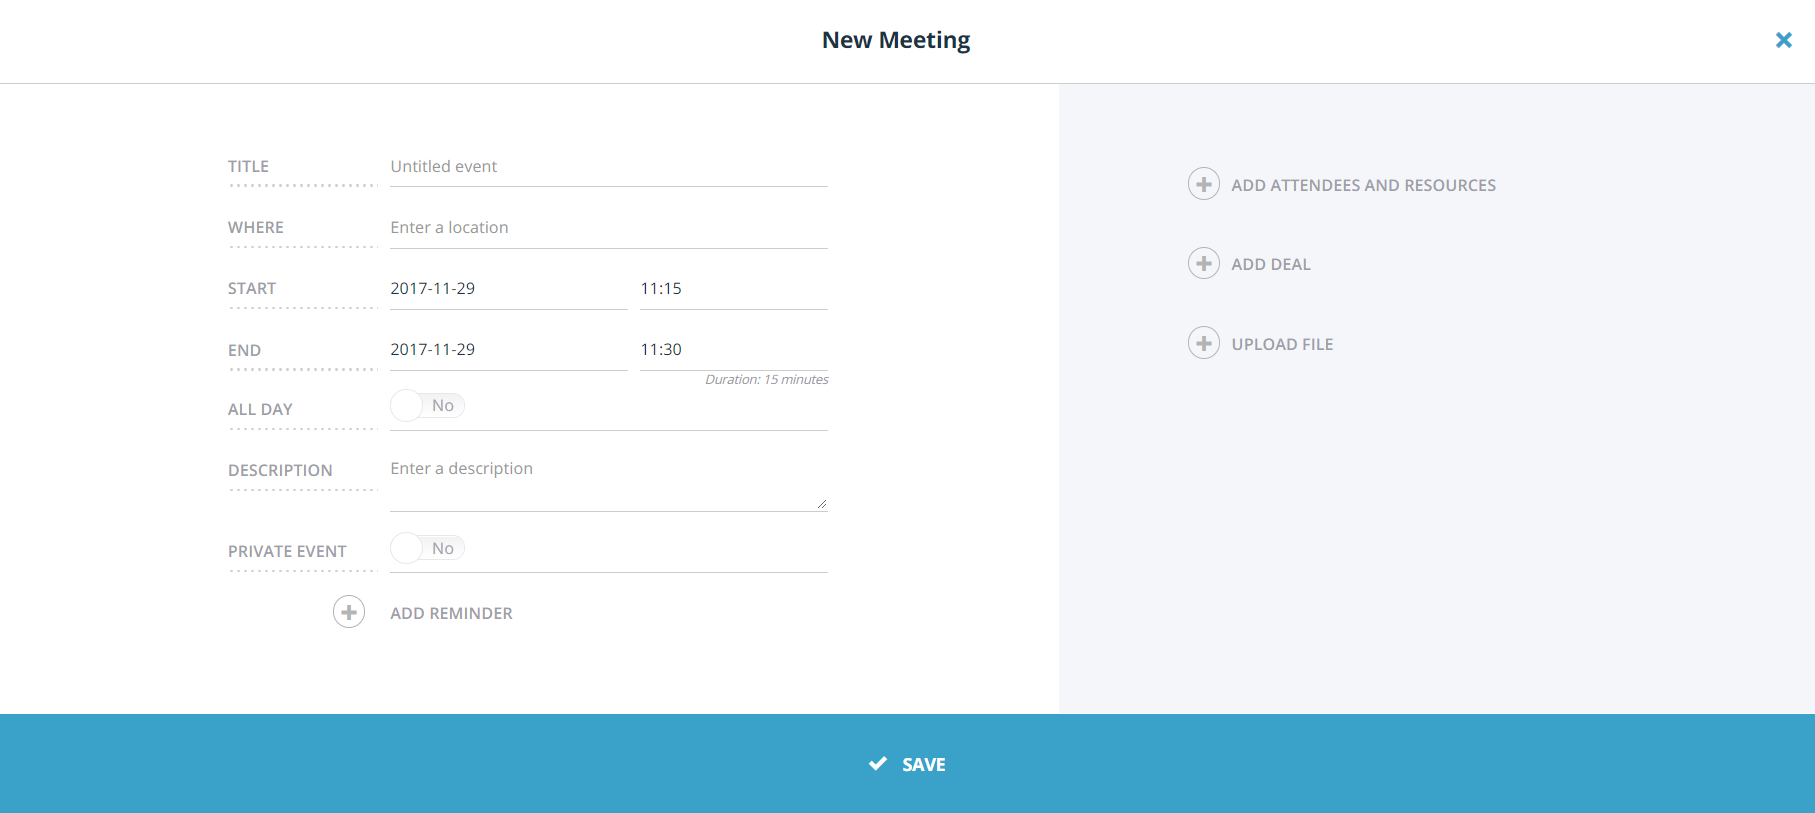 new-meeting-teamgate-calendar.png